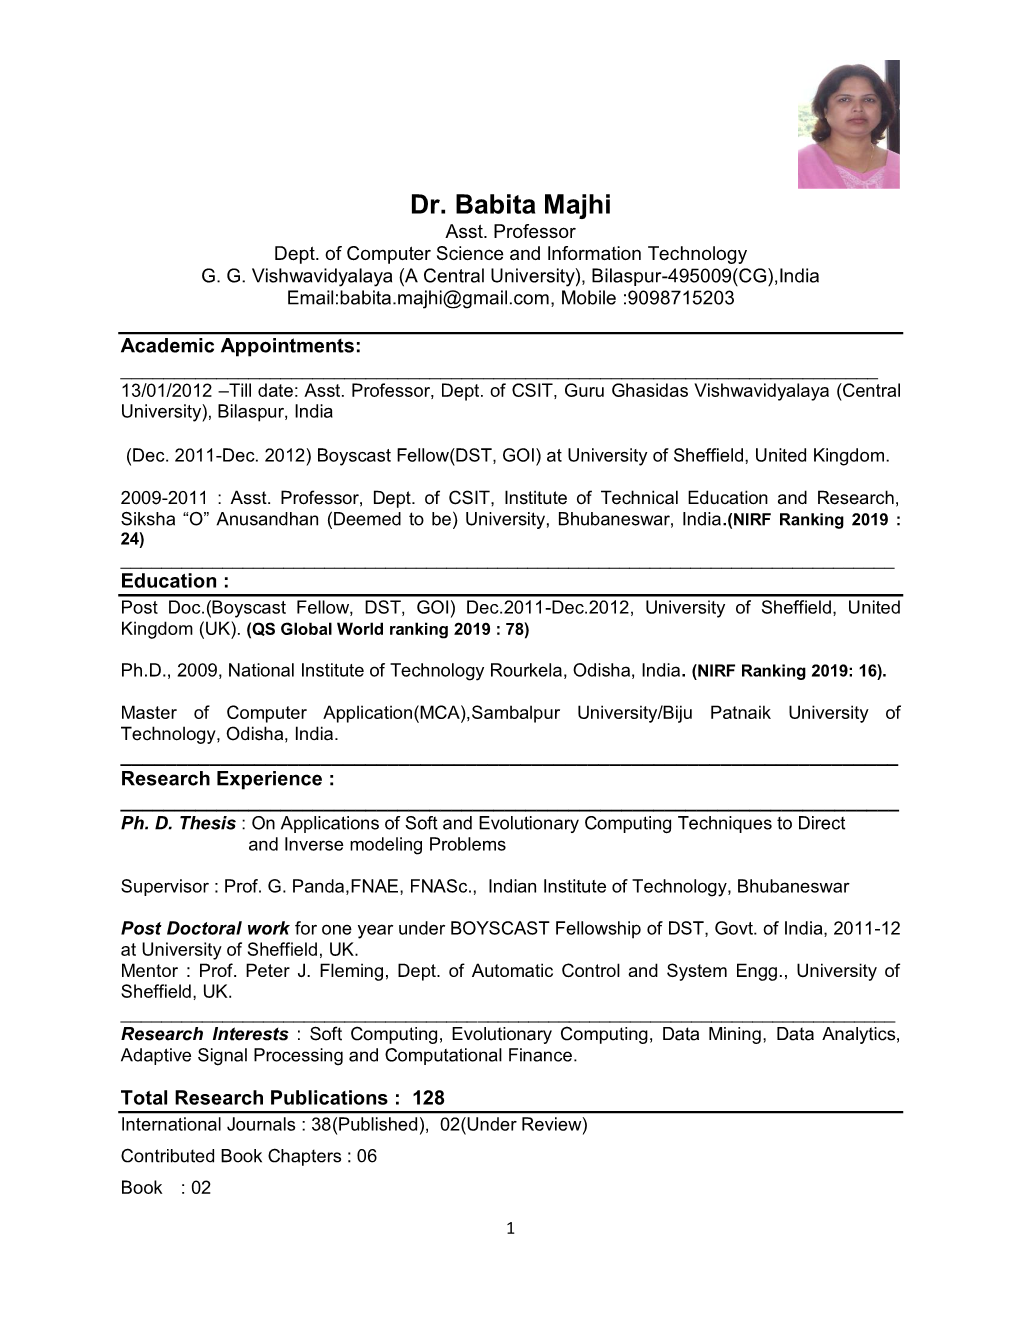 Dr. Babita Majhi Asst